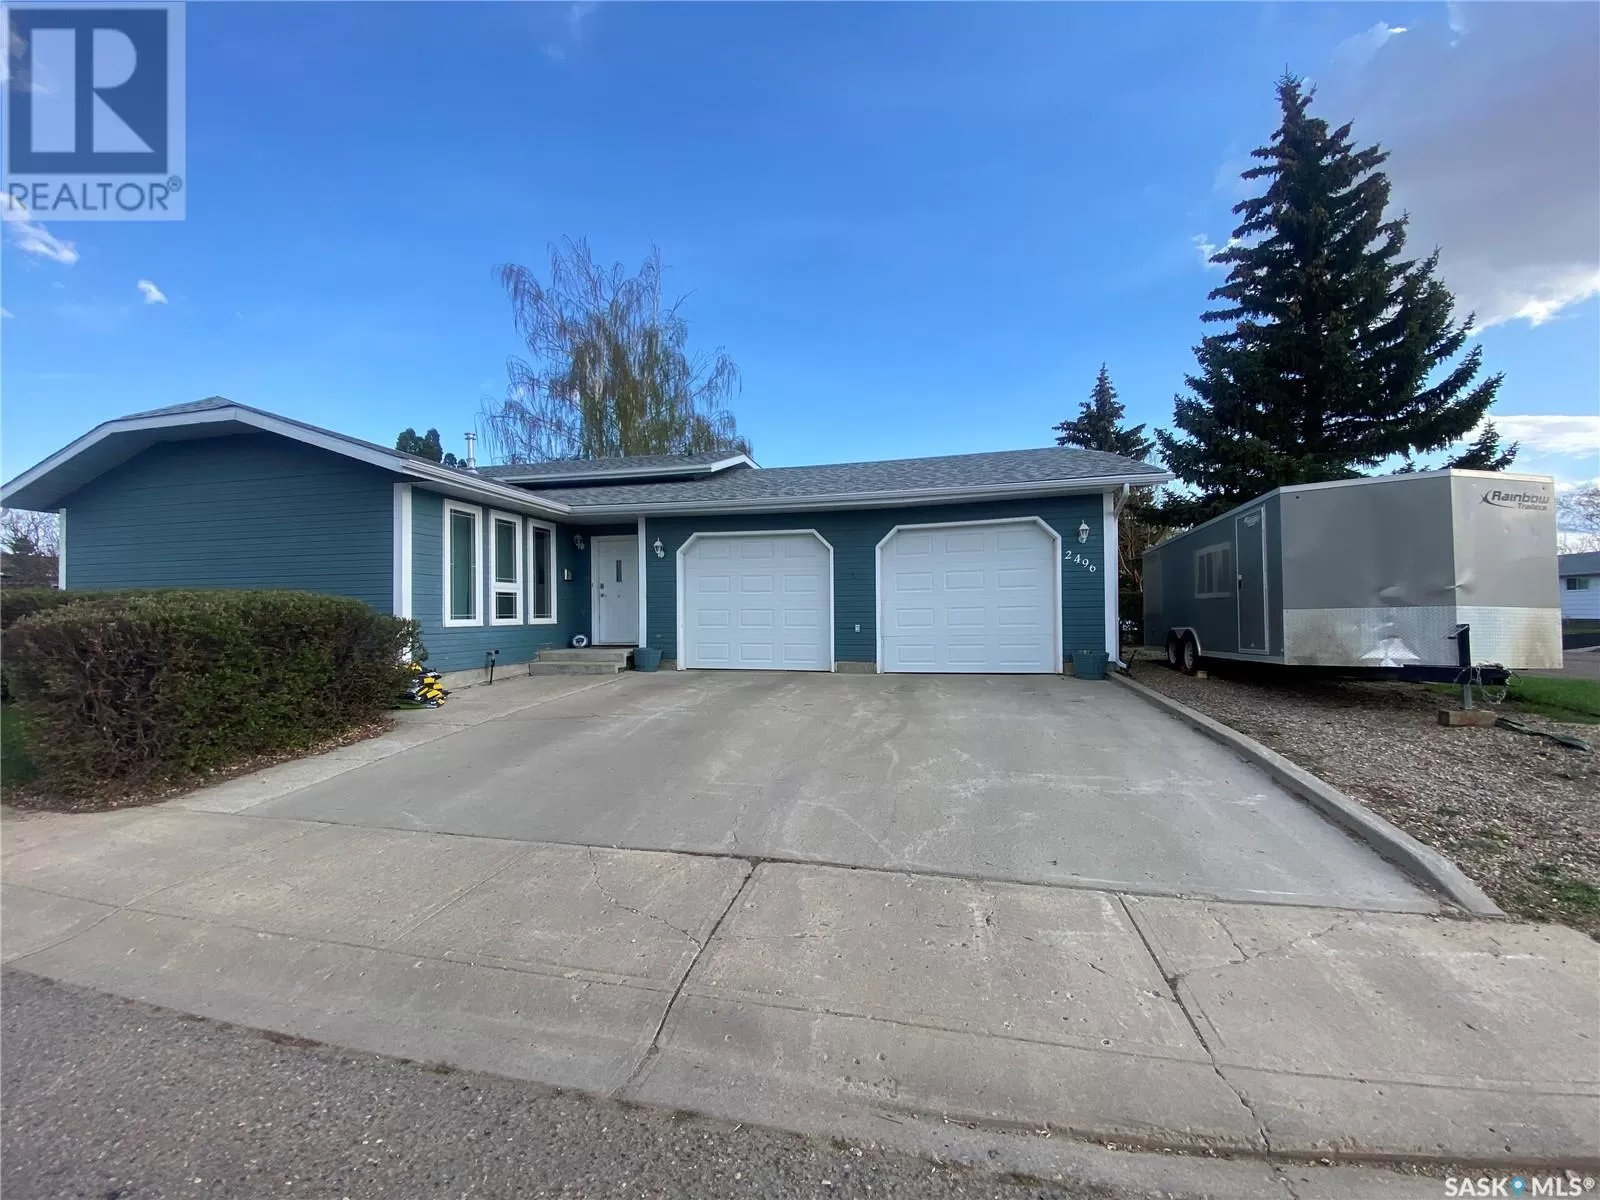 House for rent: 2496 Hamelin Street, North Battleford, Saskatchewan S9A 3R8